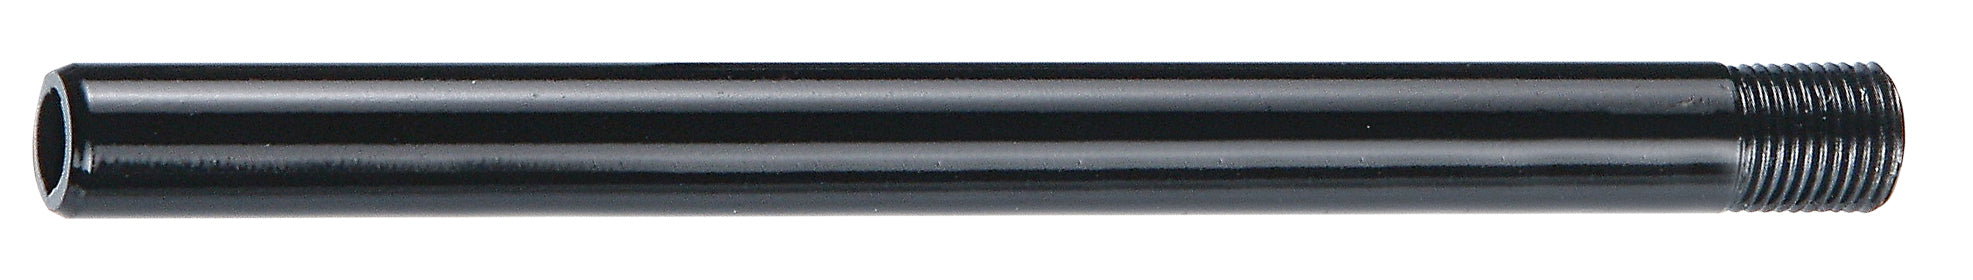 7402 - 15 Pc. ATF Filler Adapter Kit